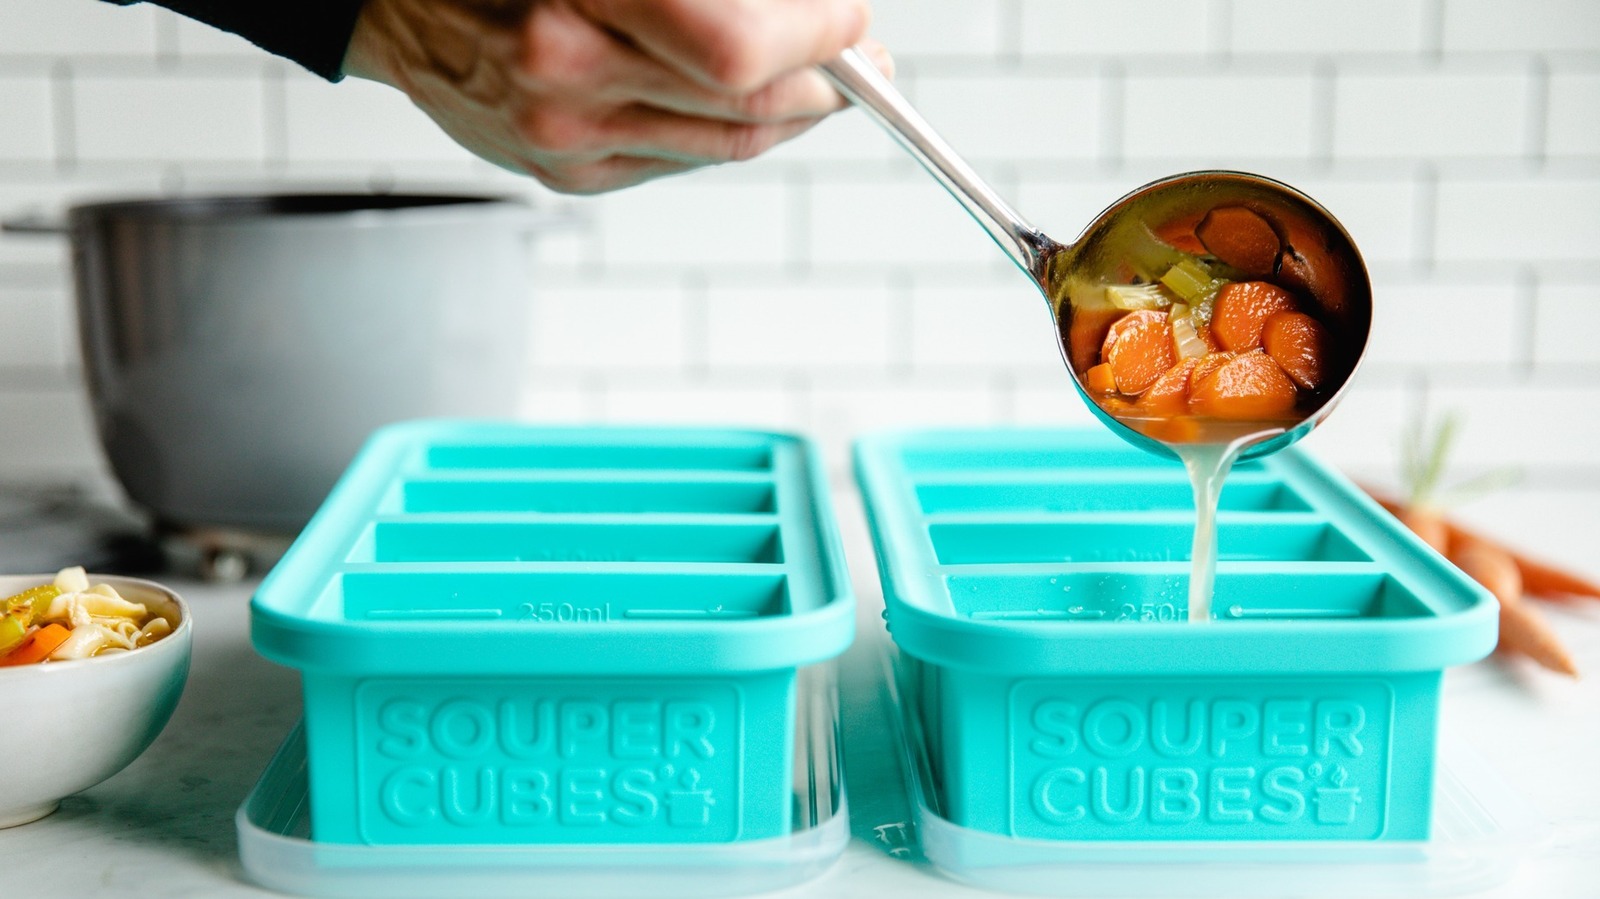 Souper Cubes Food Freezing Tray Shark Tank Season 12